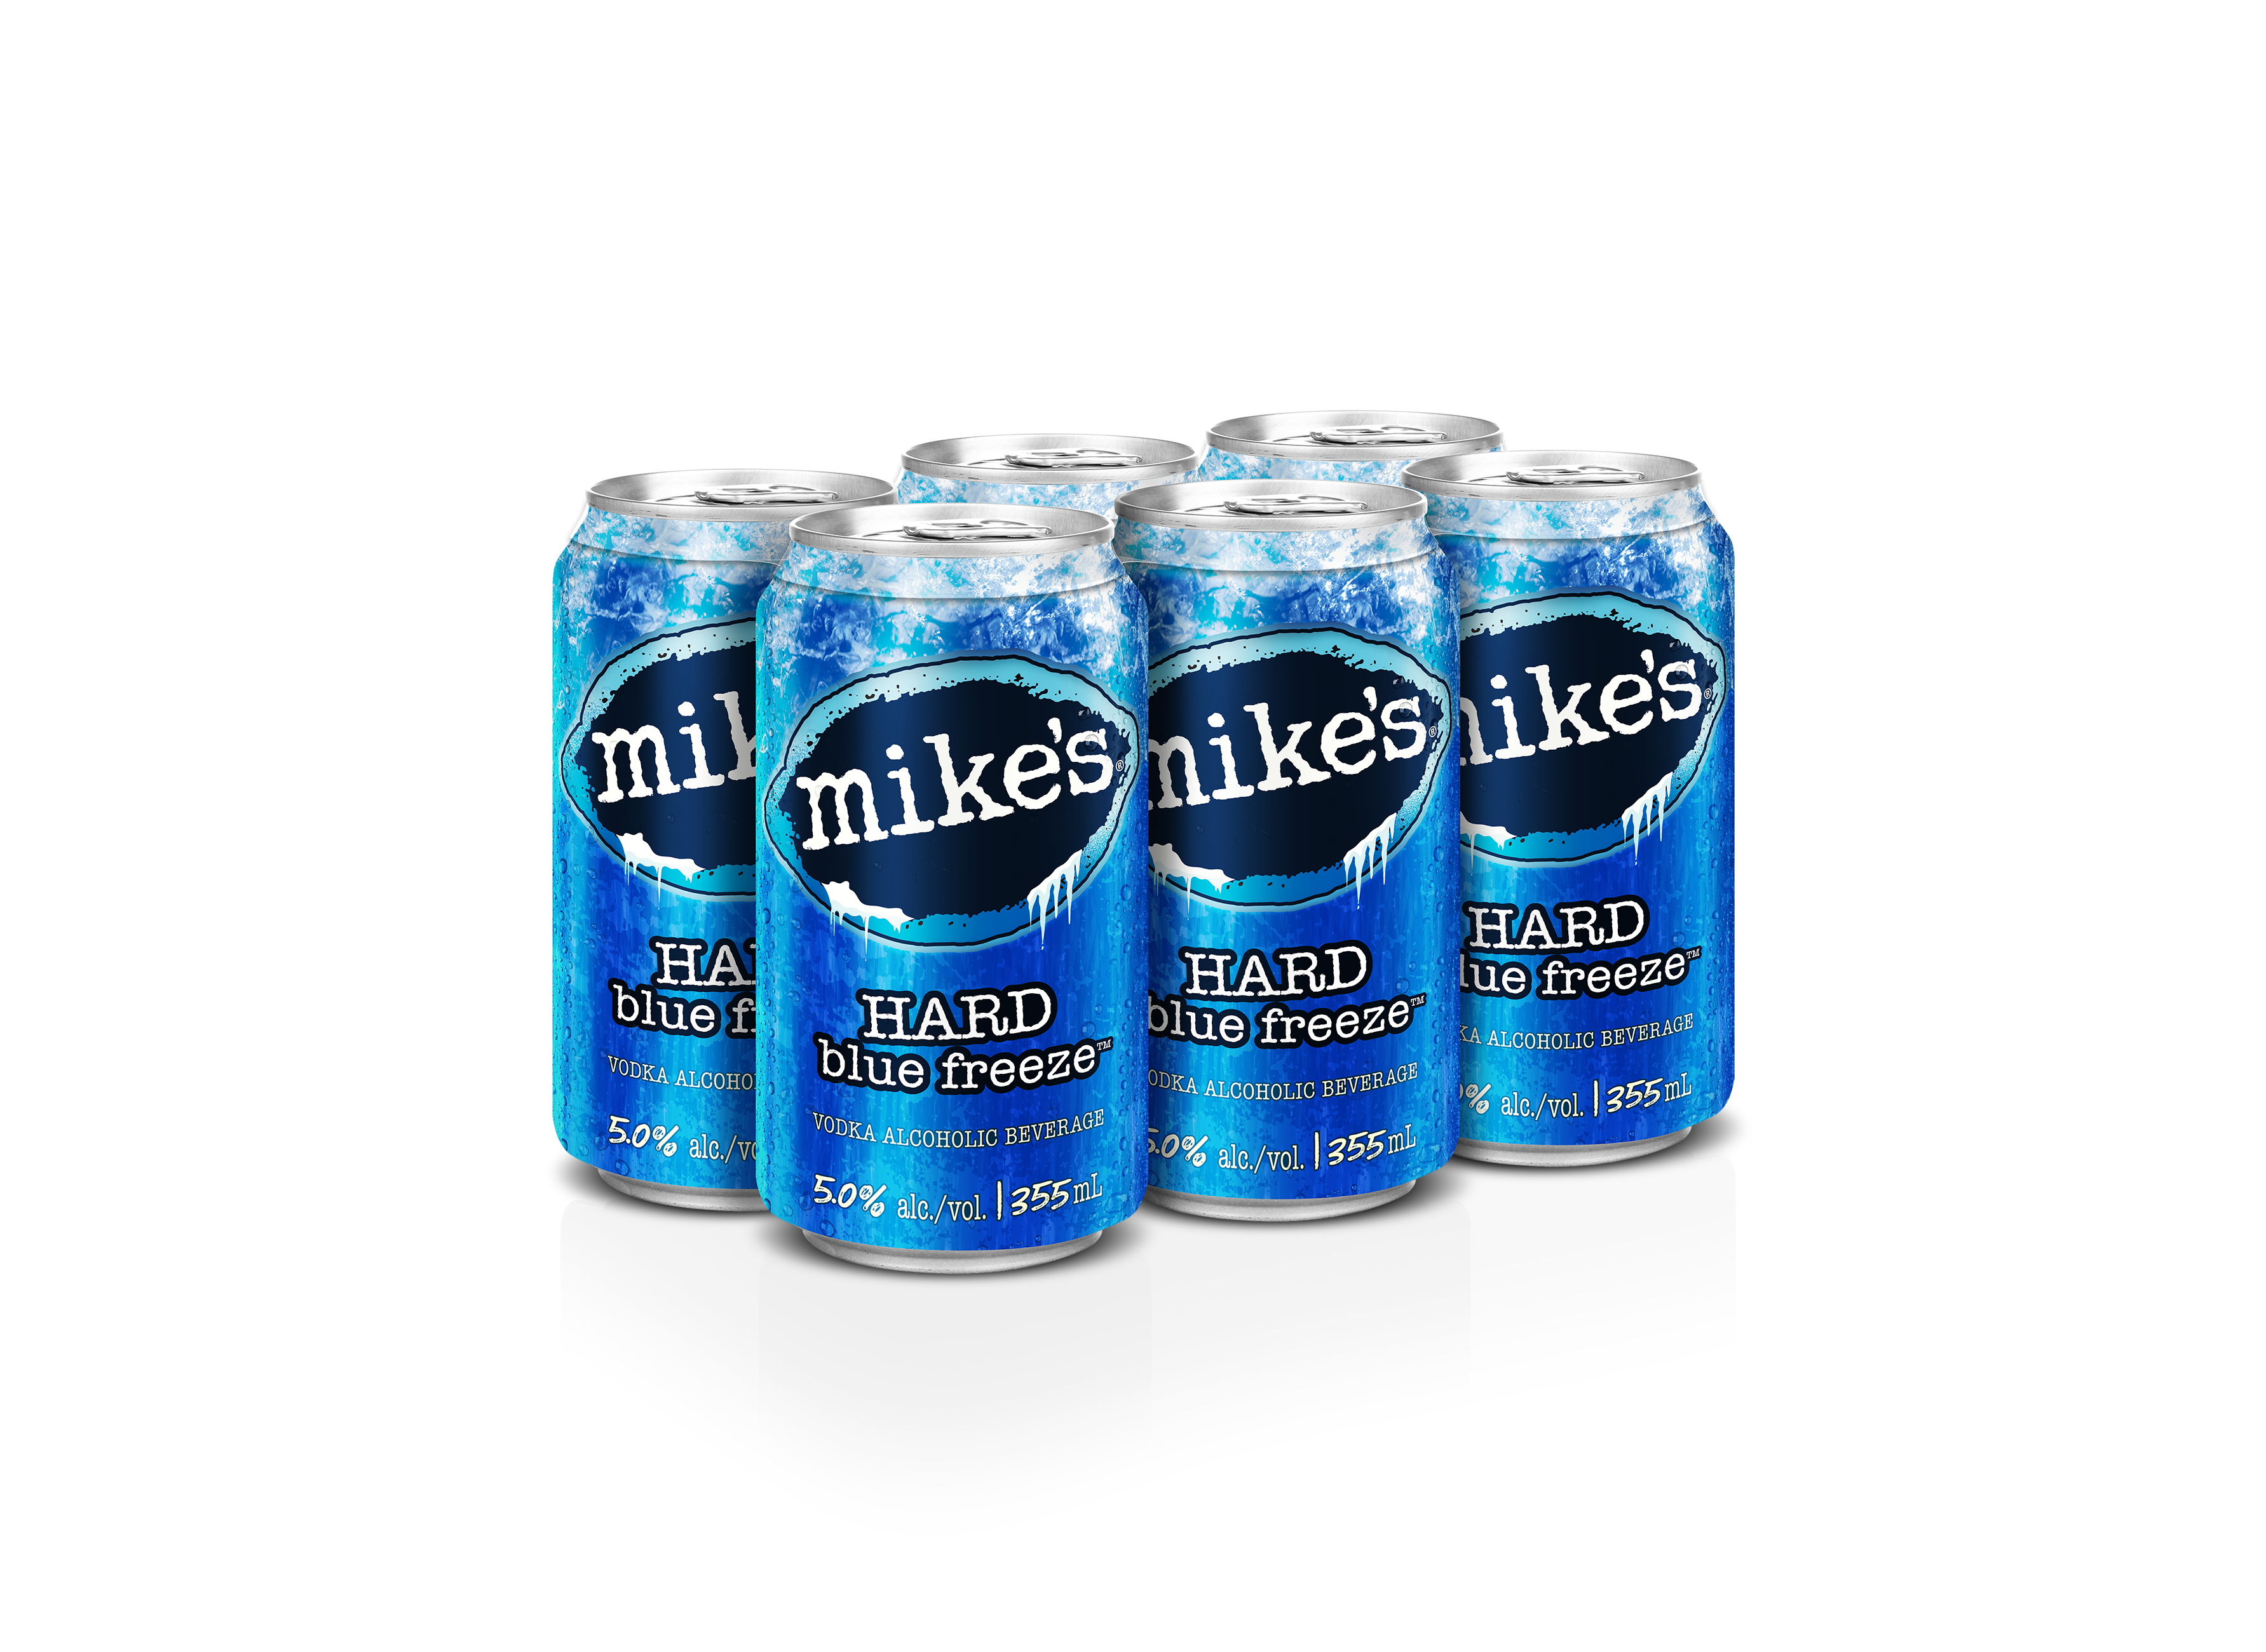 Mike's Hard Blue Freeze Lemonade 2130ml